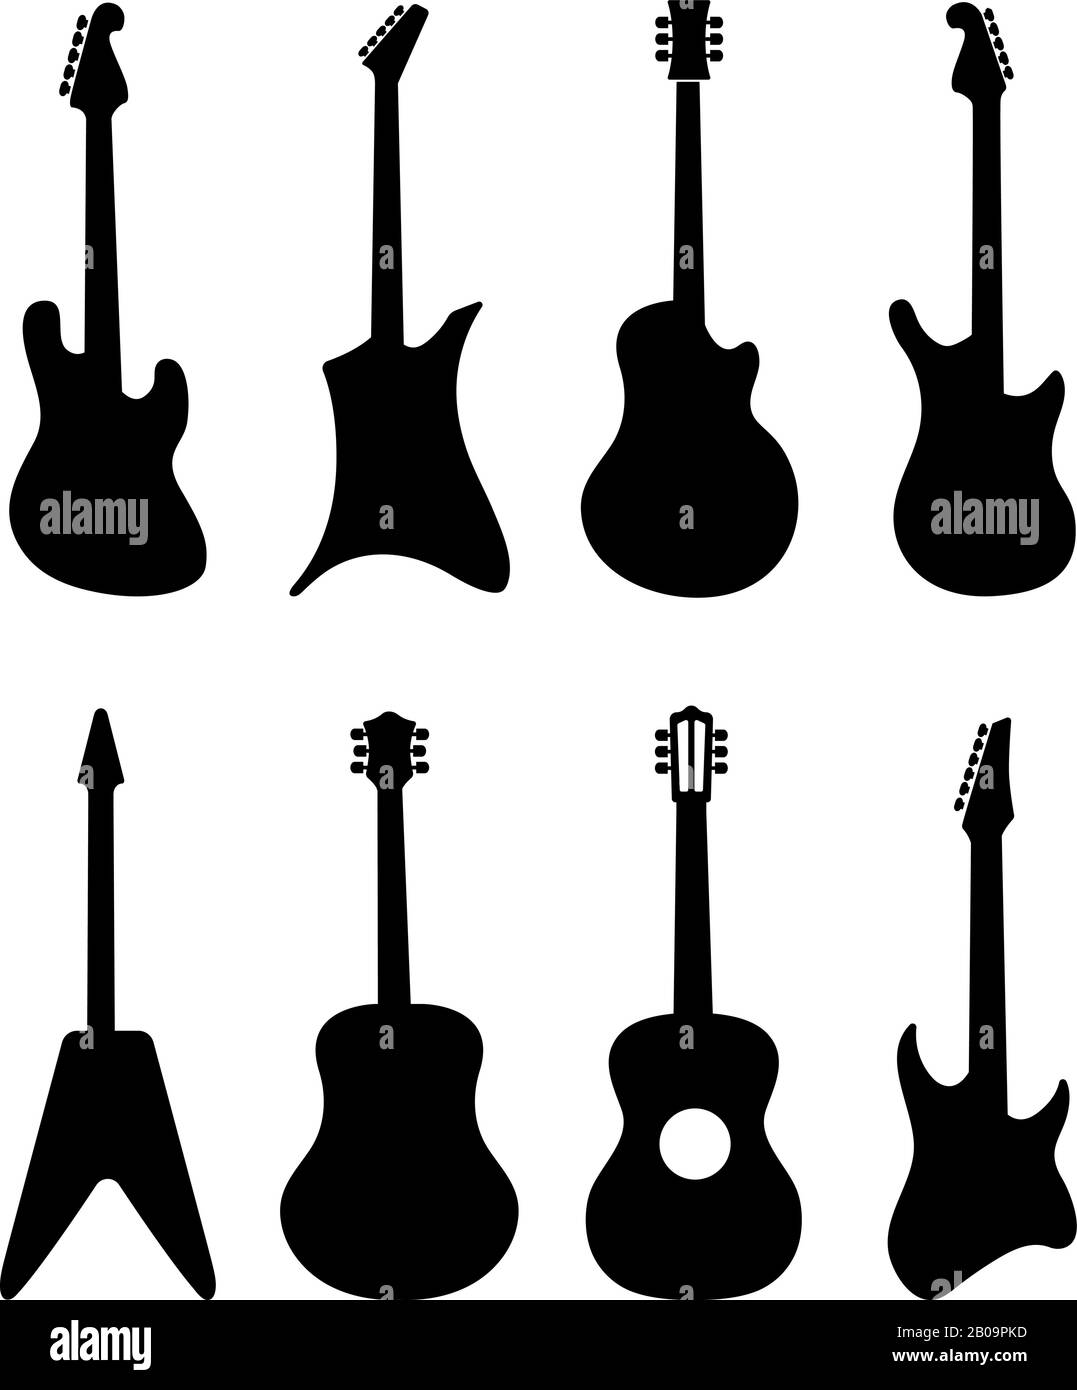 Gitarrenvektor-Silhouetten. Rock, Akustik, E-Gitarren. Schwarze Silhouette der Rockgitarre, Illustration von Musiksaitengitarren Stock Vektor